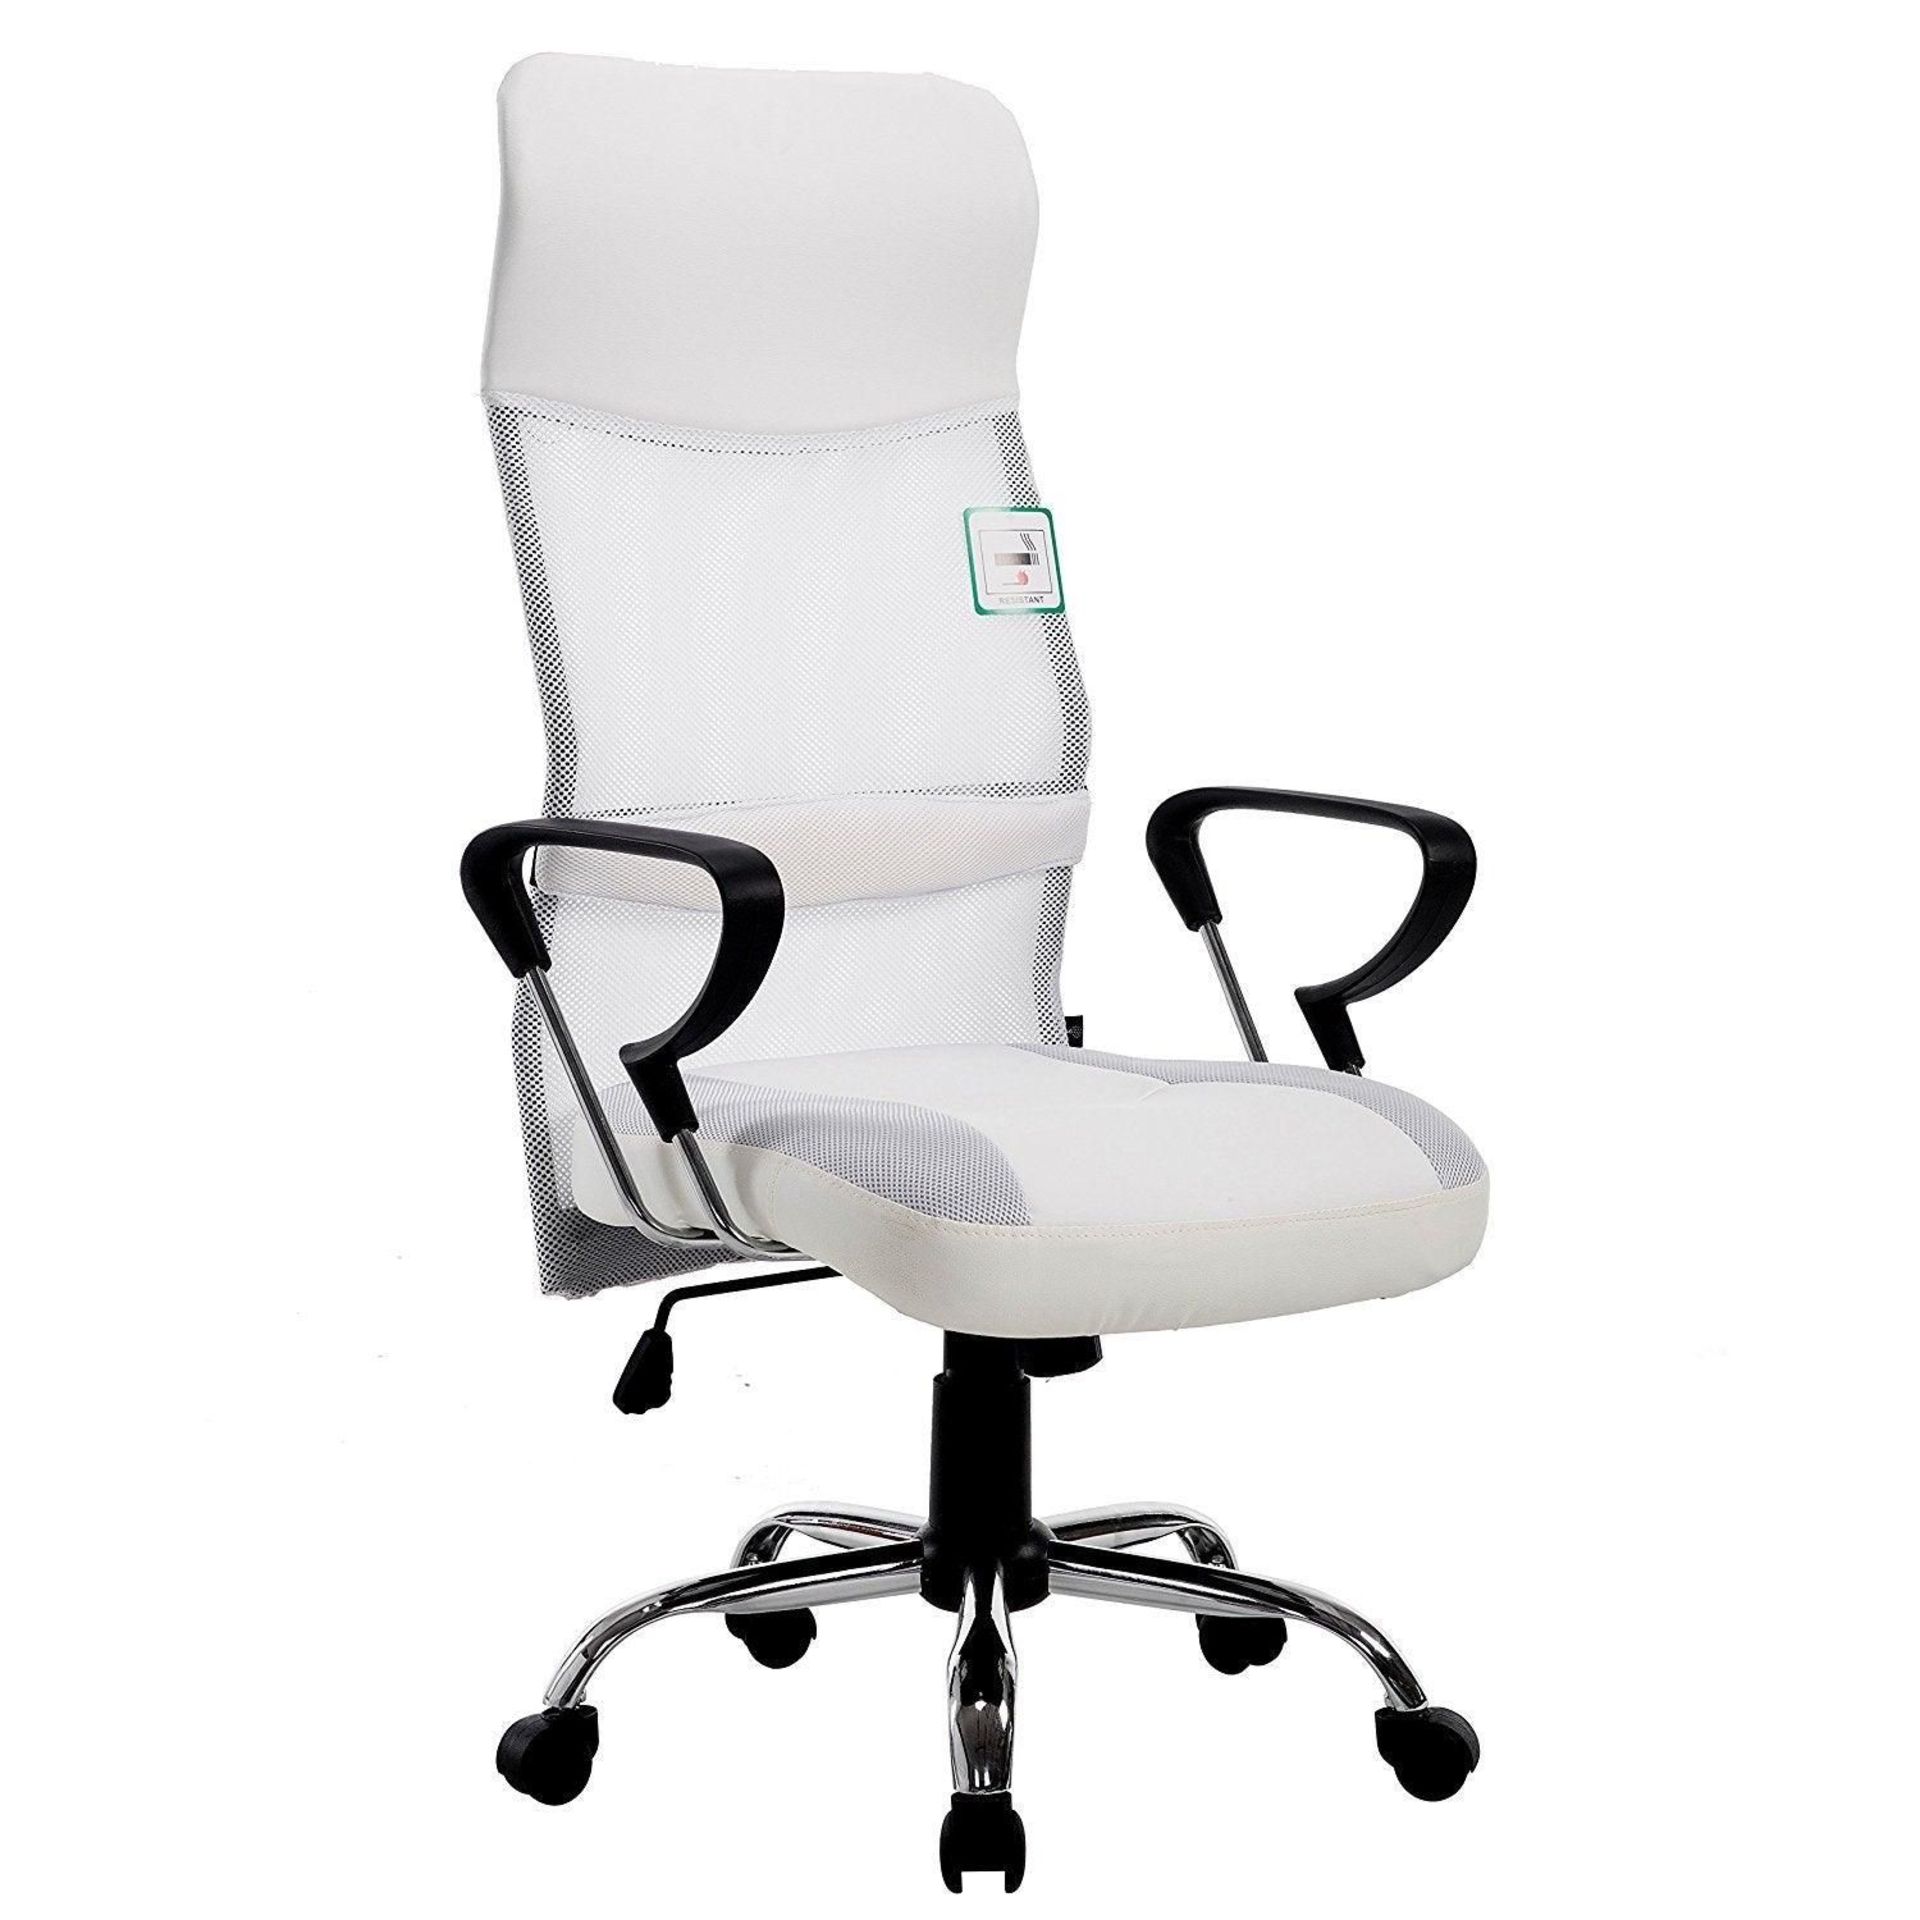 Sleek Design High Back Mesh Fabric Swivel Office Chair with Chrome Base, MO57 White. -ER30.